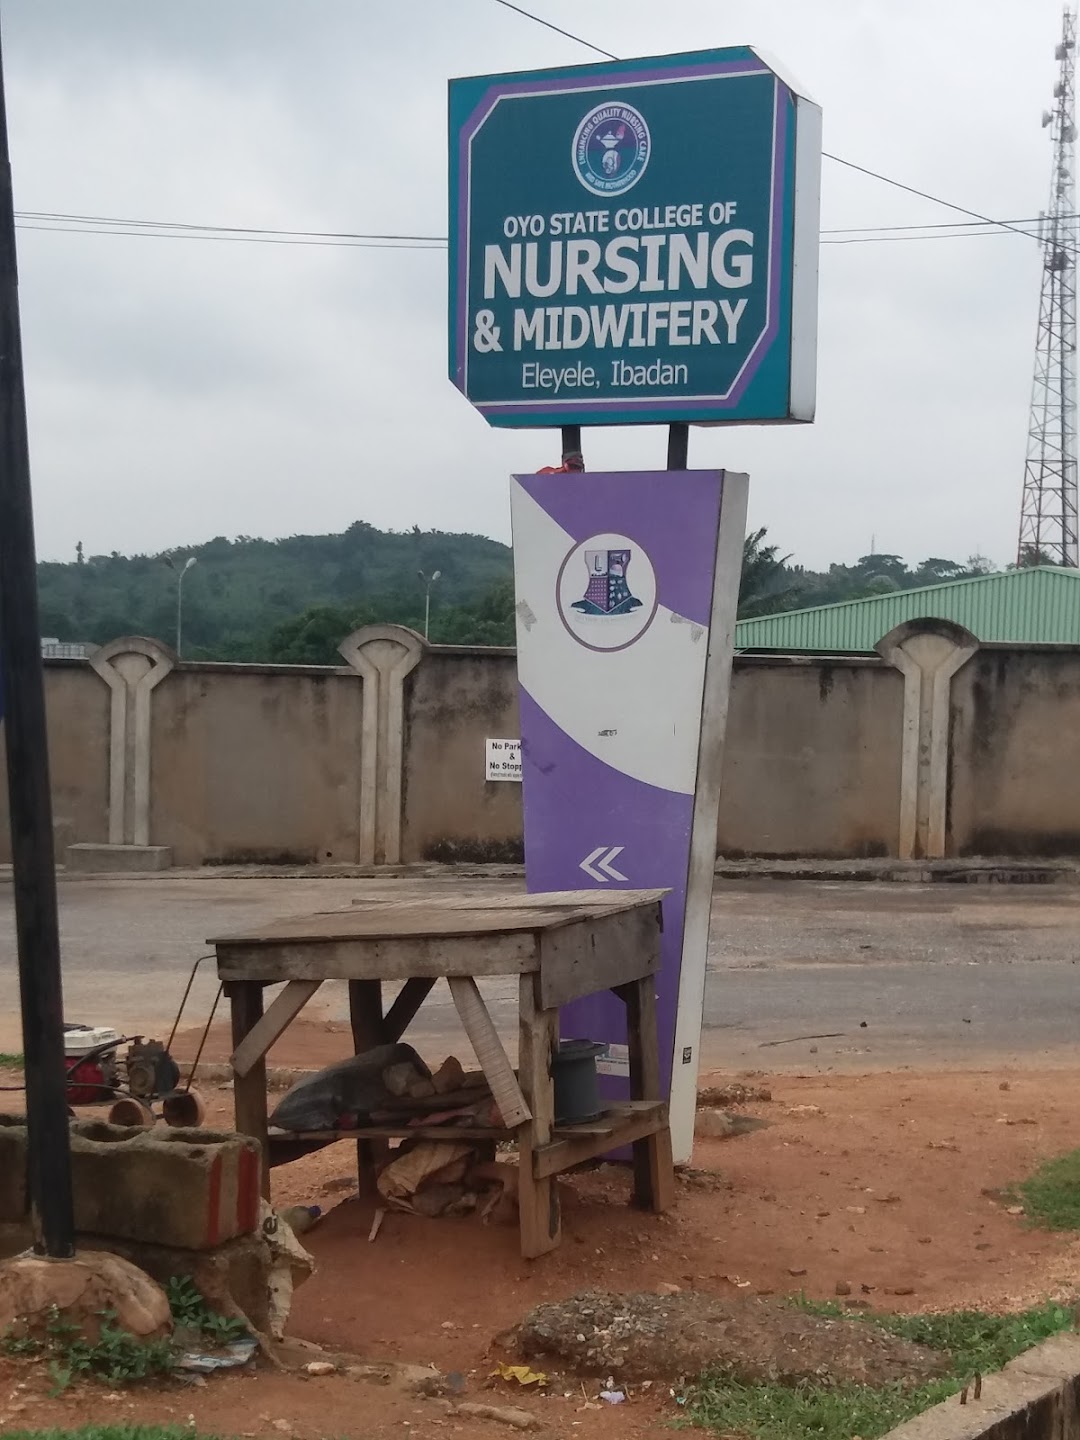 Oyo State College of Nursing & Midwifery